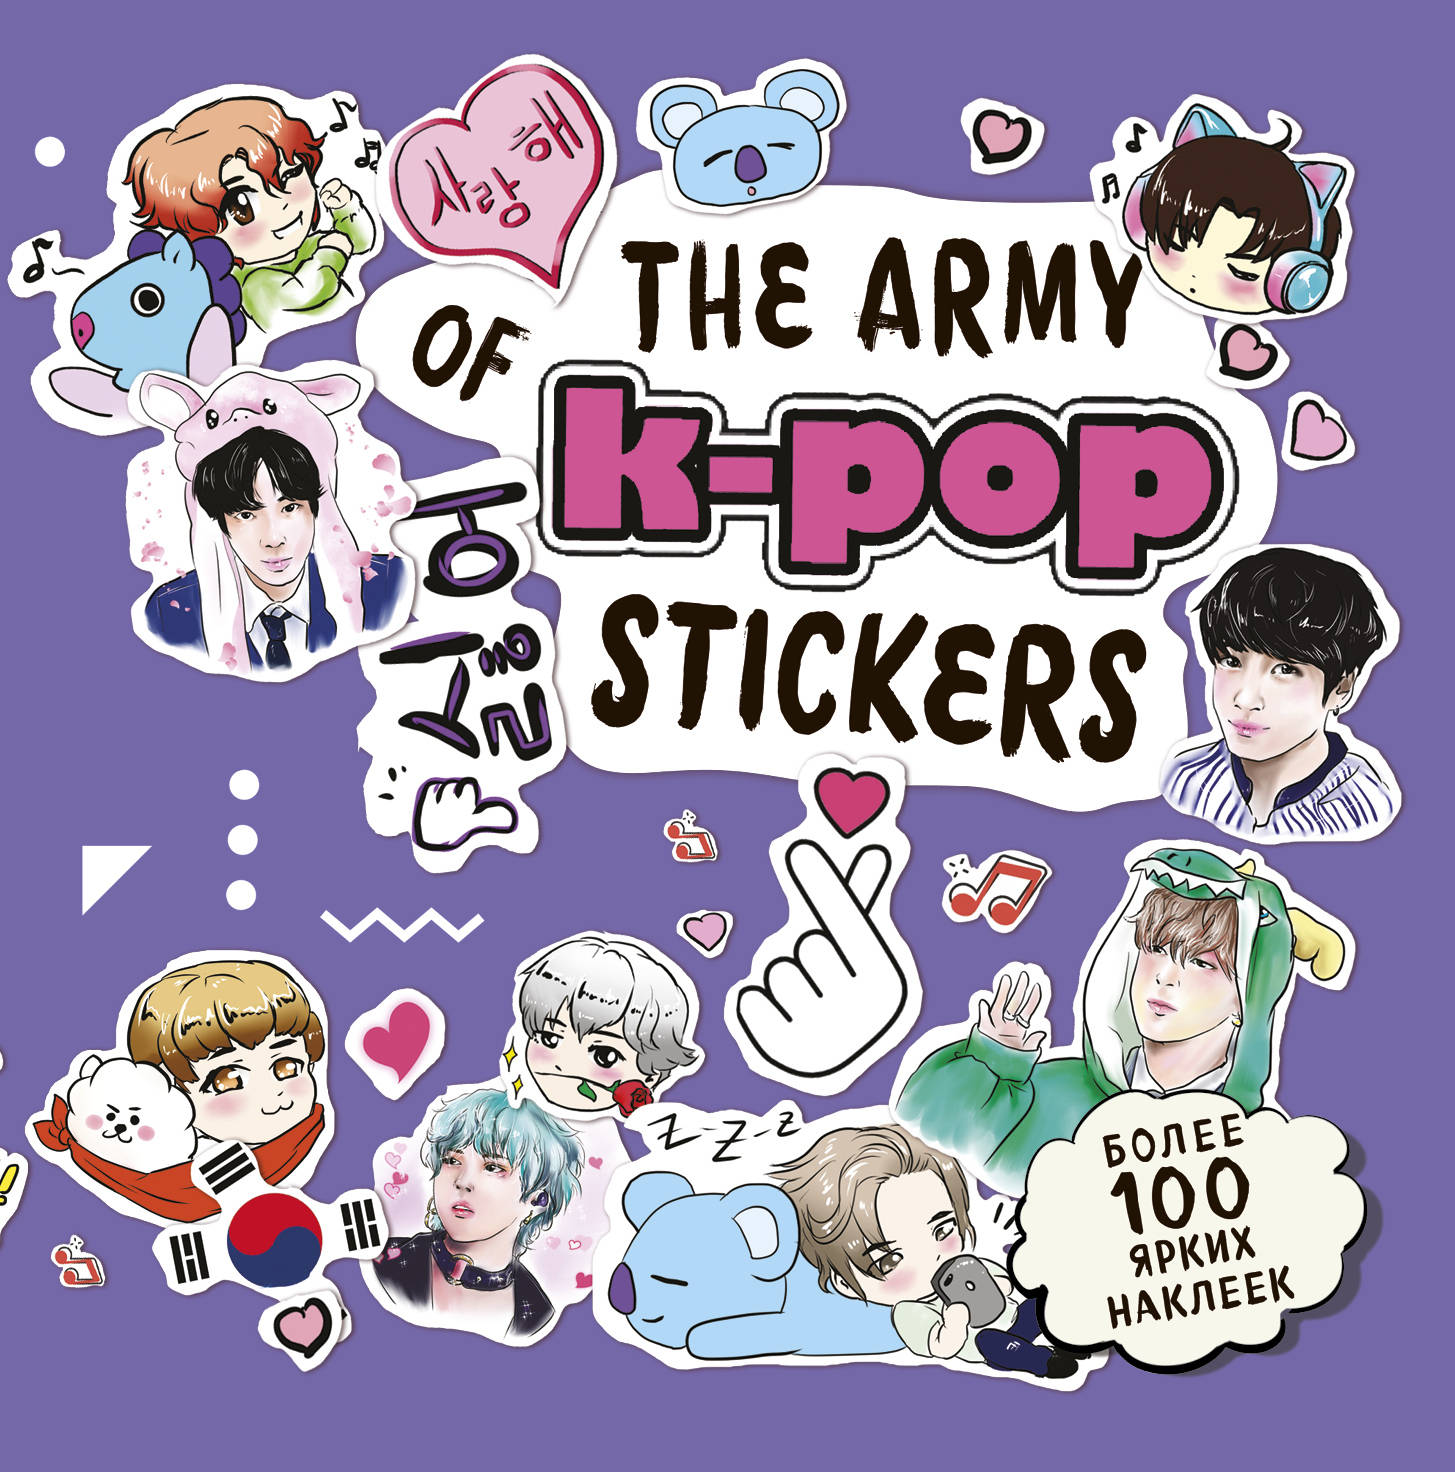 фото The Army of K-pop stickers. Более 100 ярких наклеек!